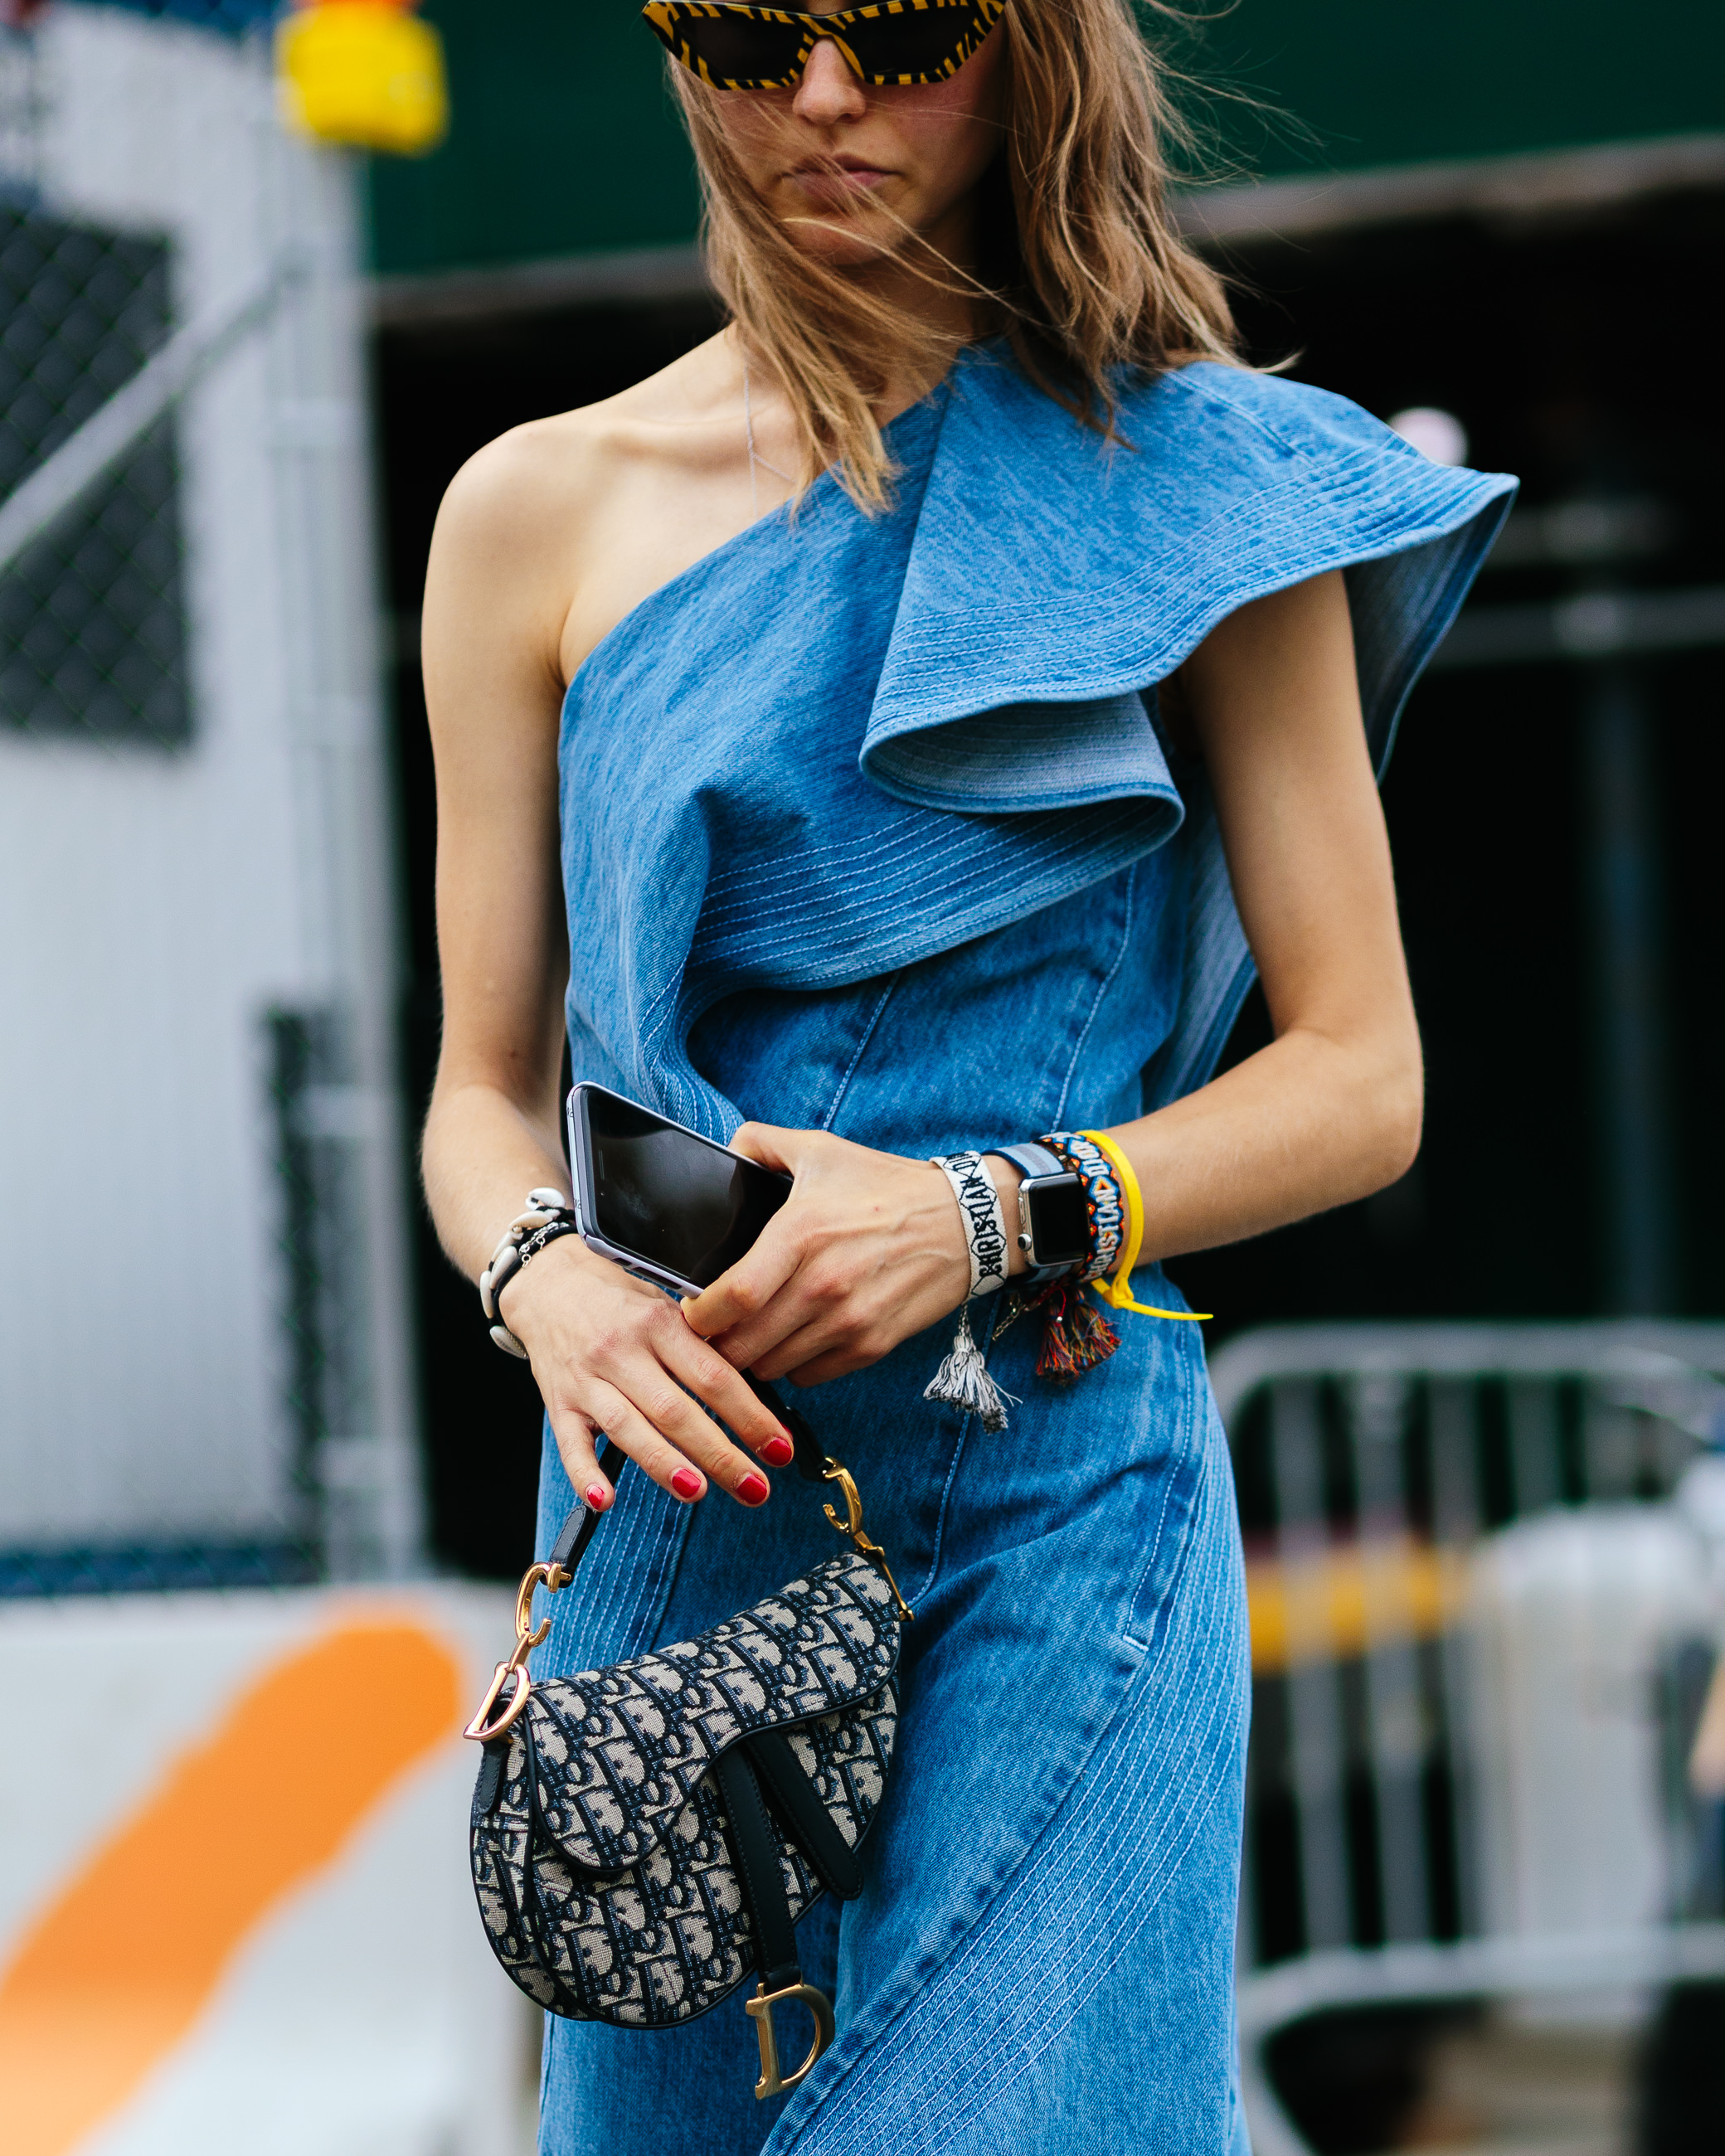 Jessica Minkoff wearing a denim dress and dior bag in NYC